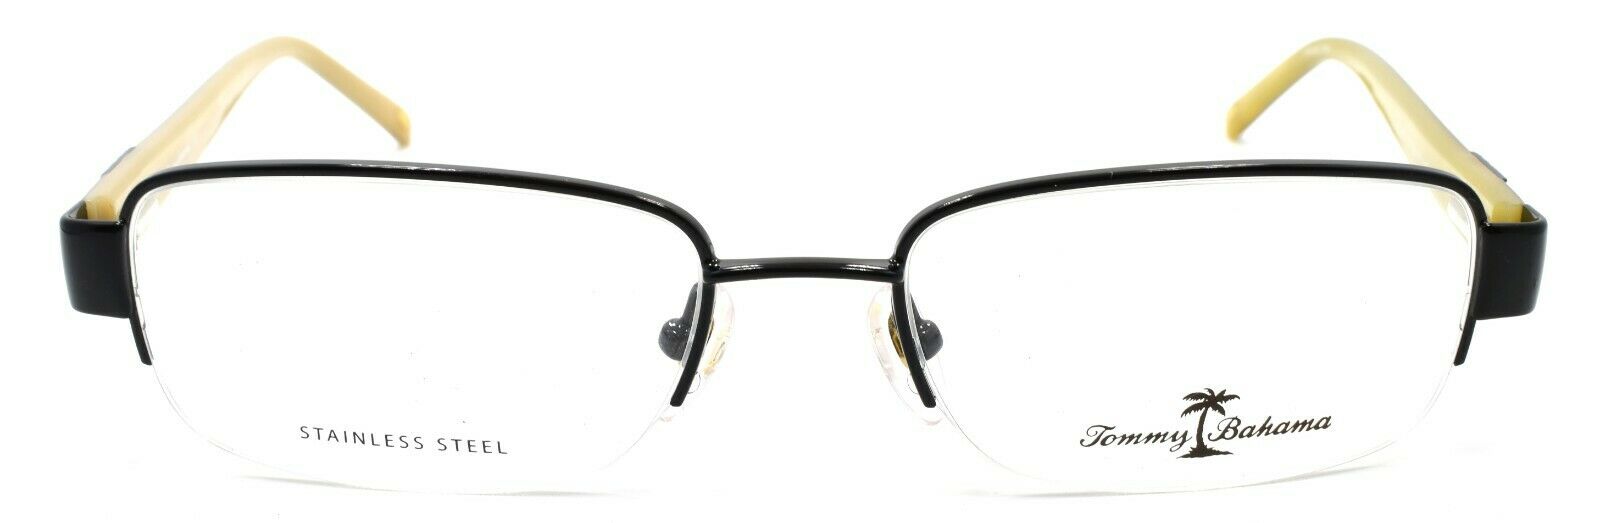 2-Tommy Bahama TB4011 001 Men's Eyeglasses Frames Half-rim 54-18-145 Black-788678016607-IKSpecs